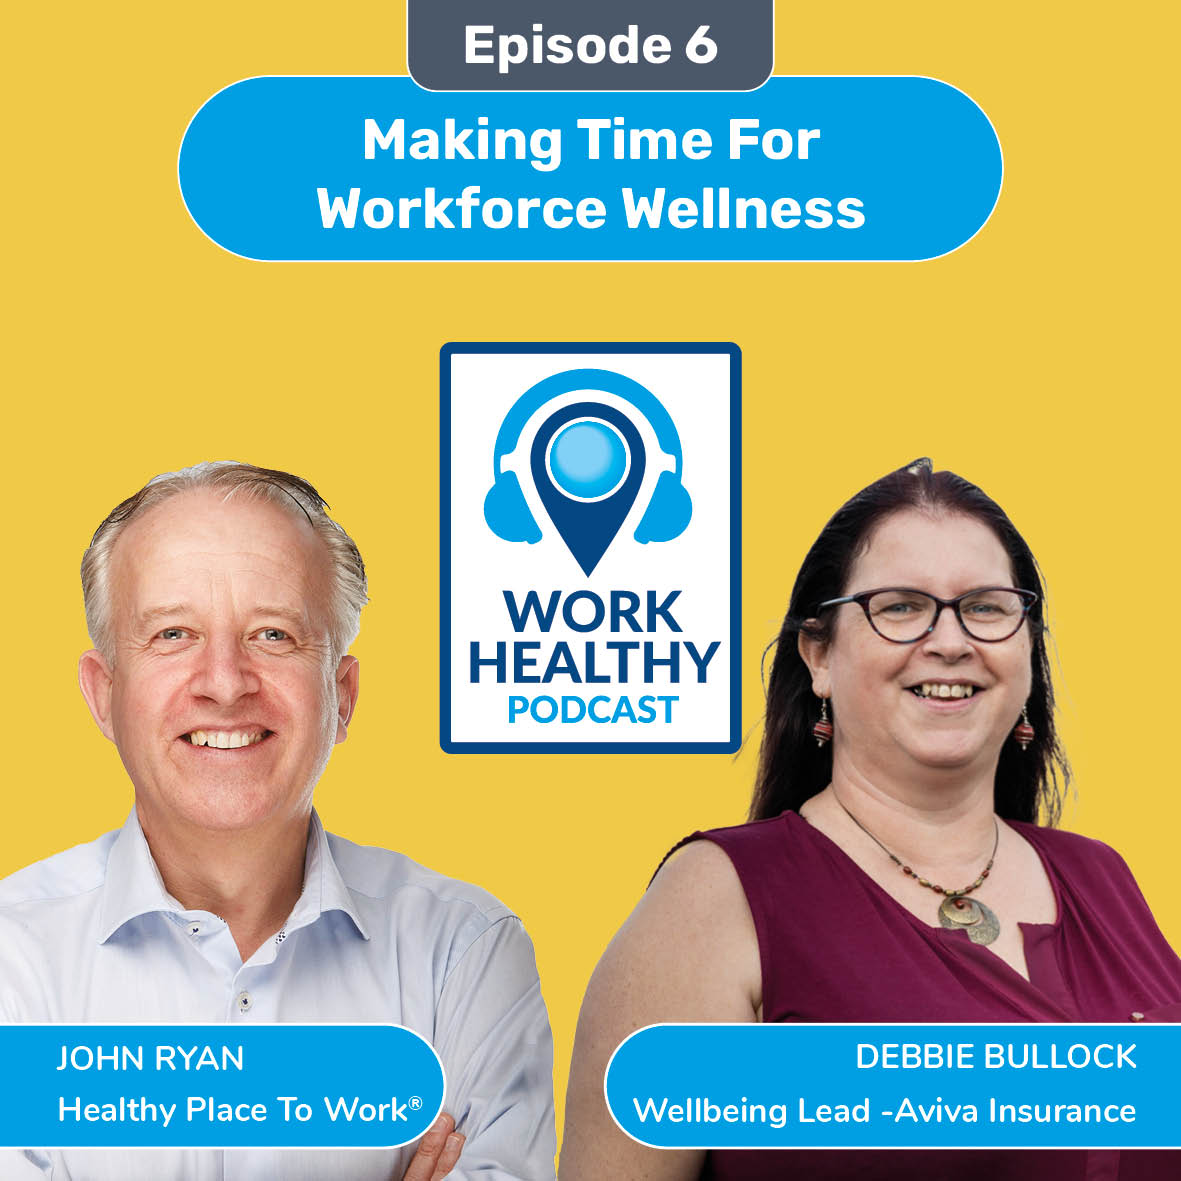 Making Time For Workforce Wellness - Debbie Bullock, Wellbeing Lead Aviva Insurance